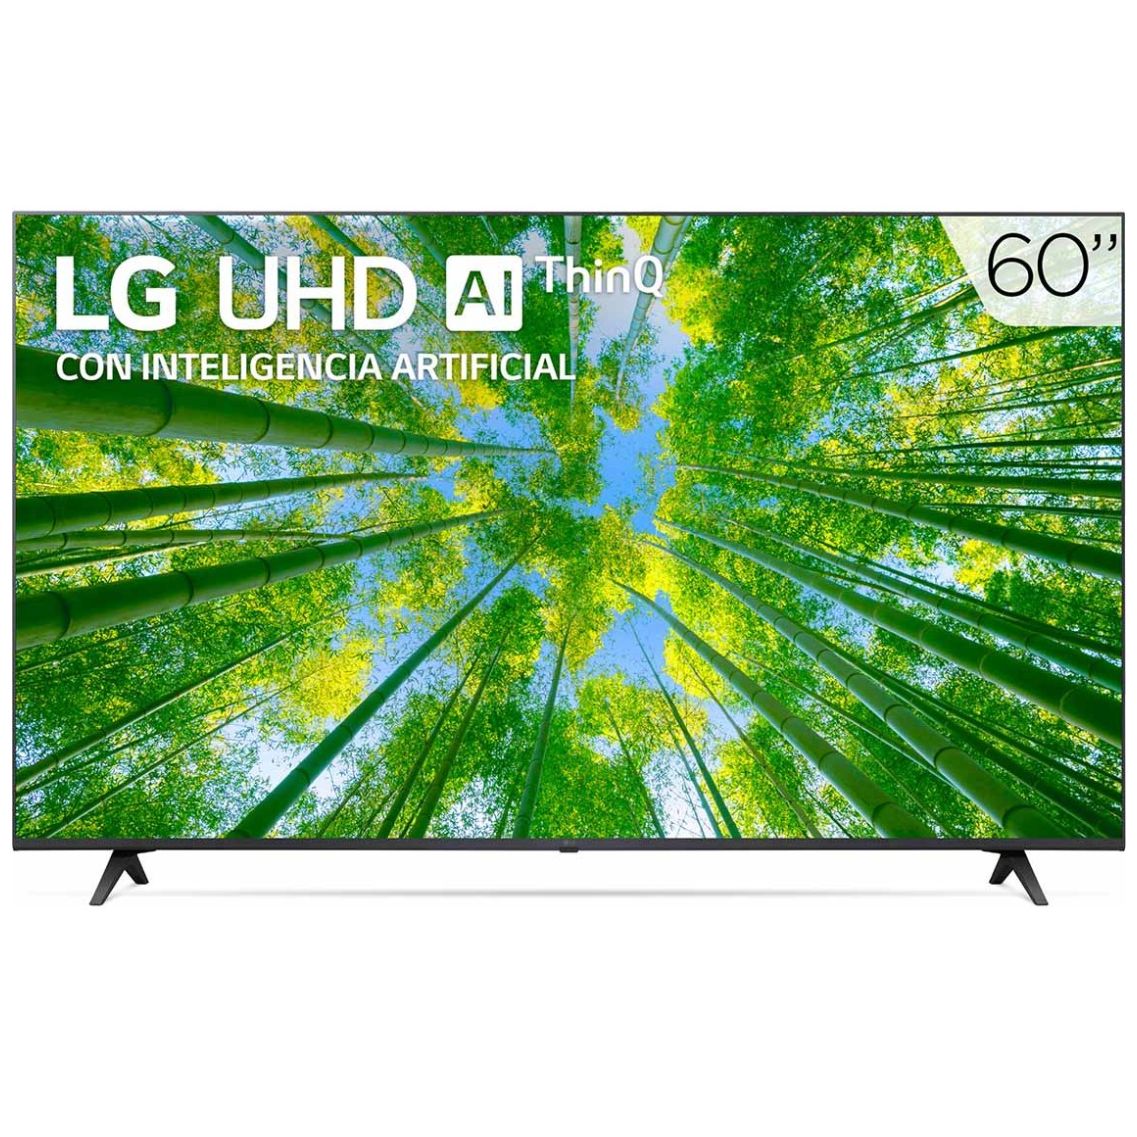 Pantalla LG 60' Uhd Tv Ai Thinq 4K Smart Tv 60Uq8000Psb